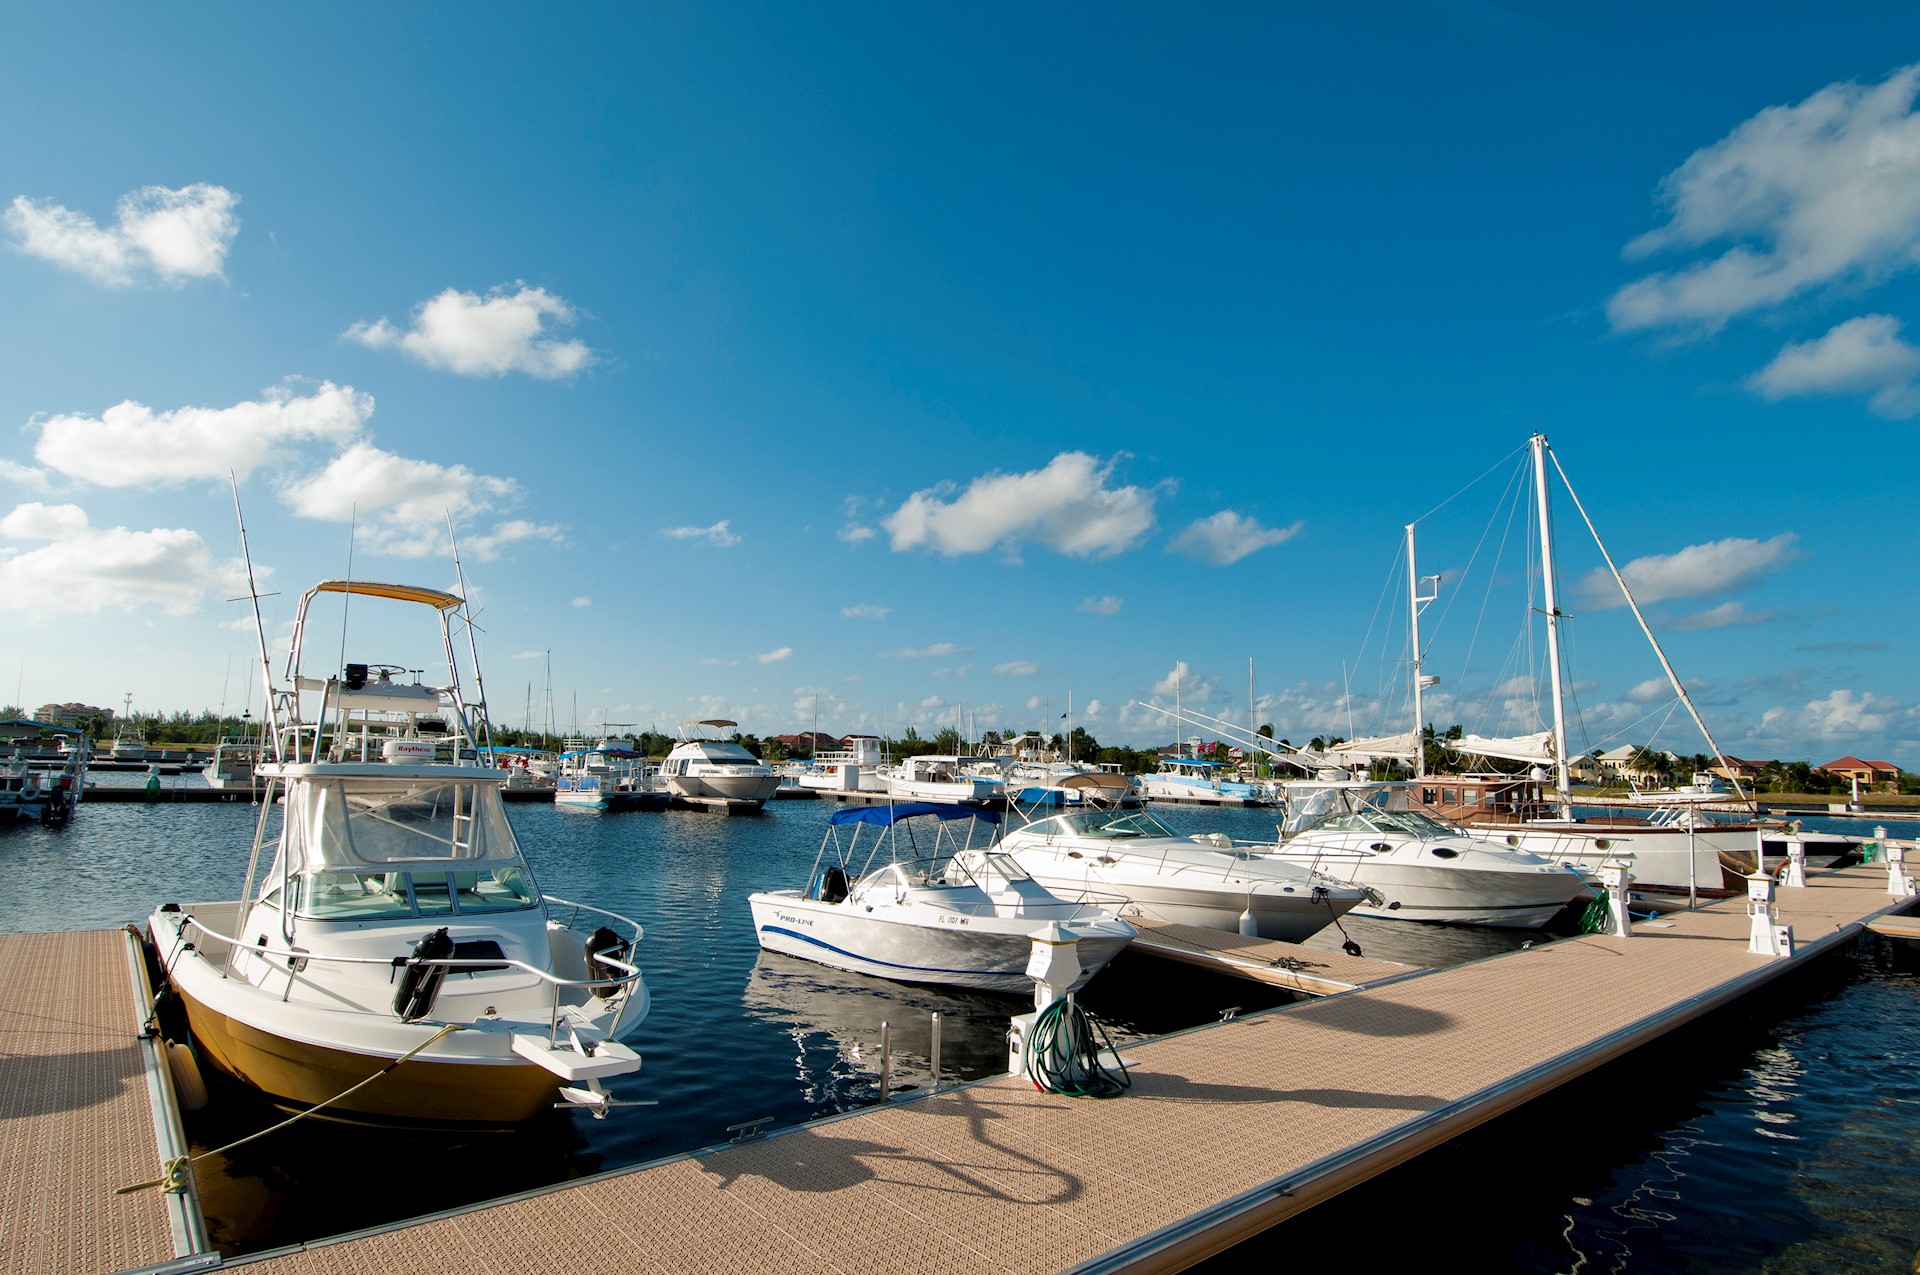 The Cayman Islands Yacht Club and Marina